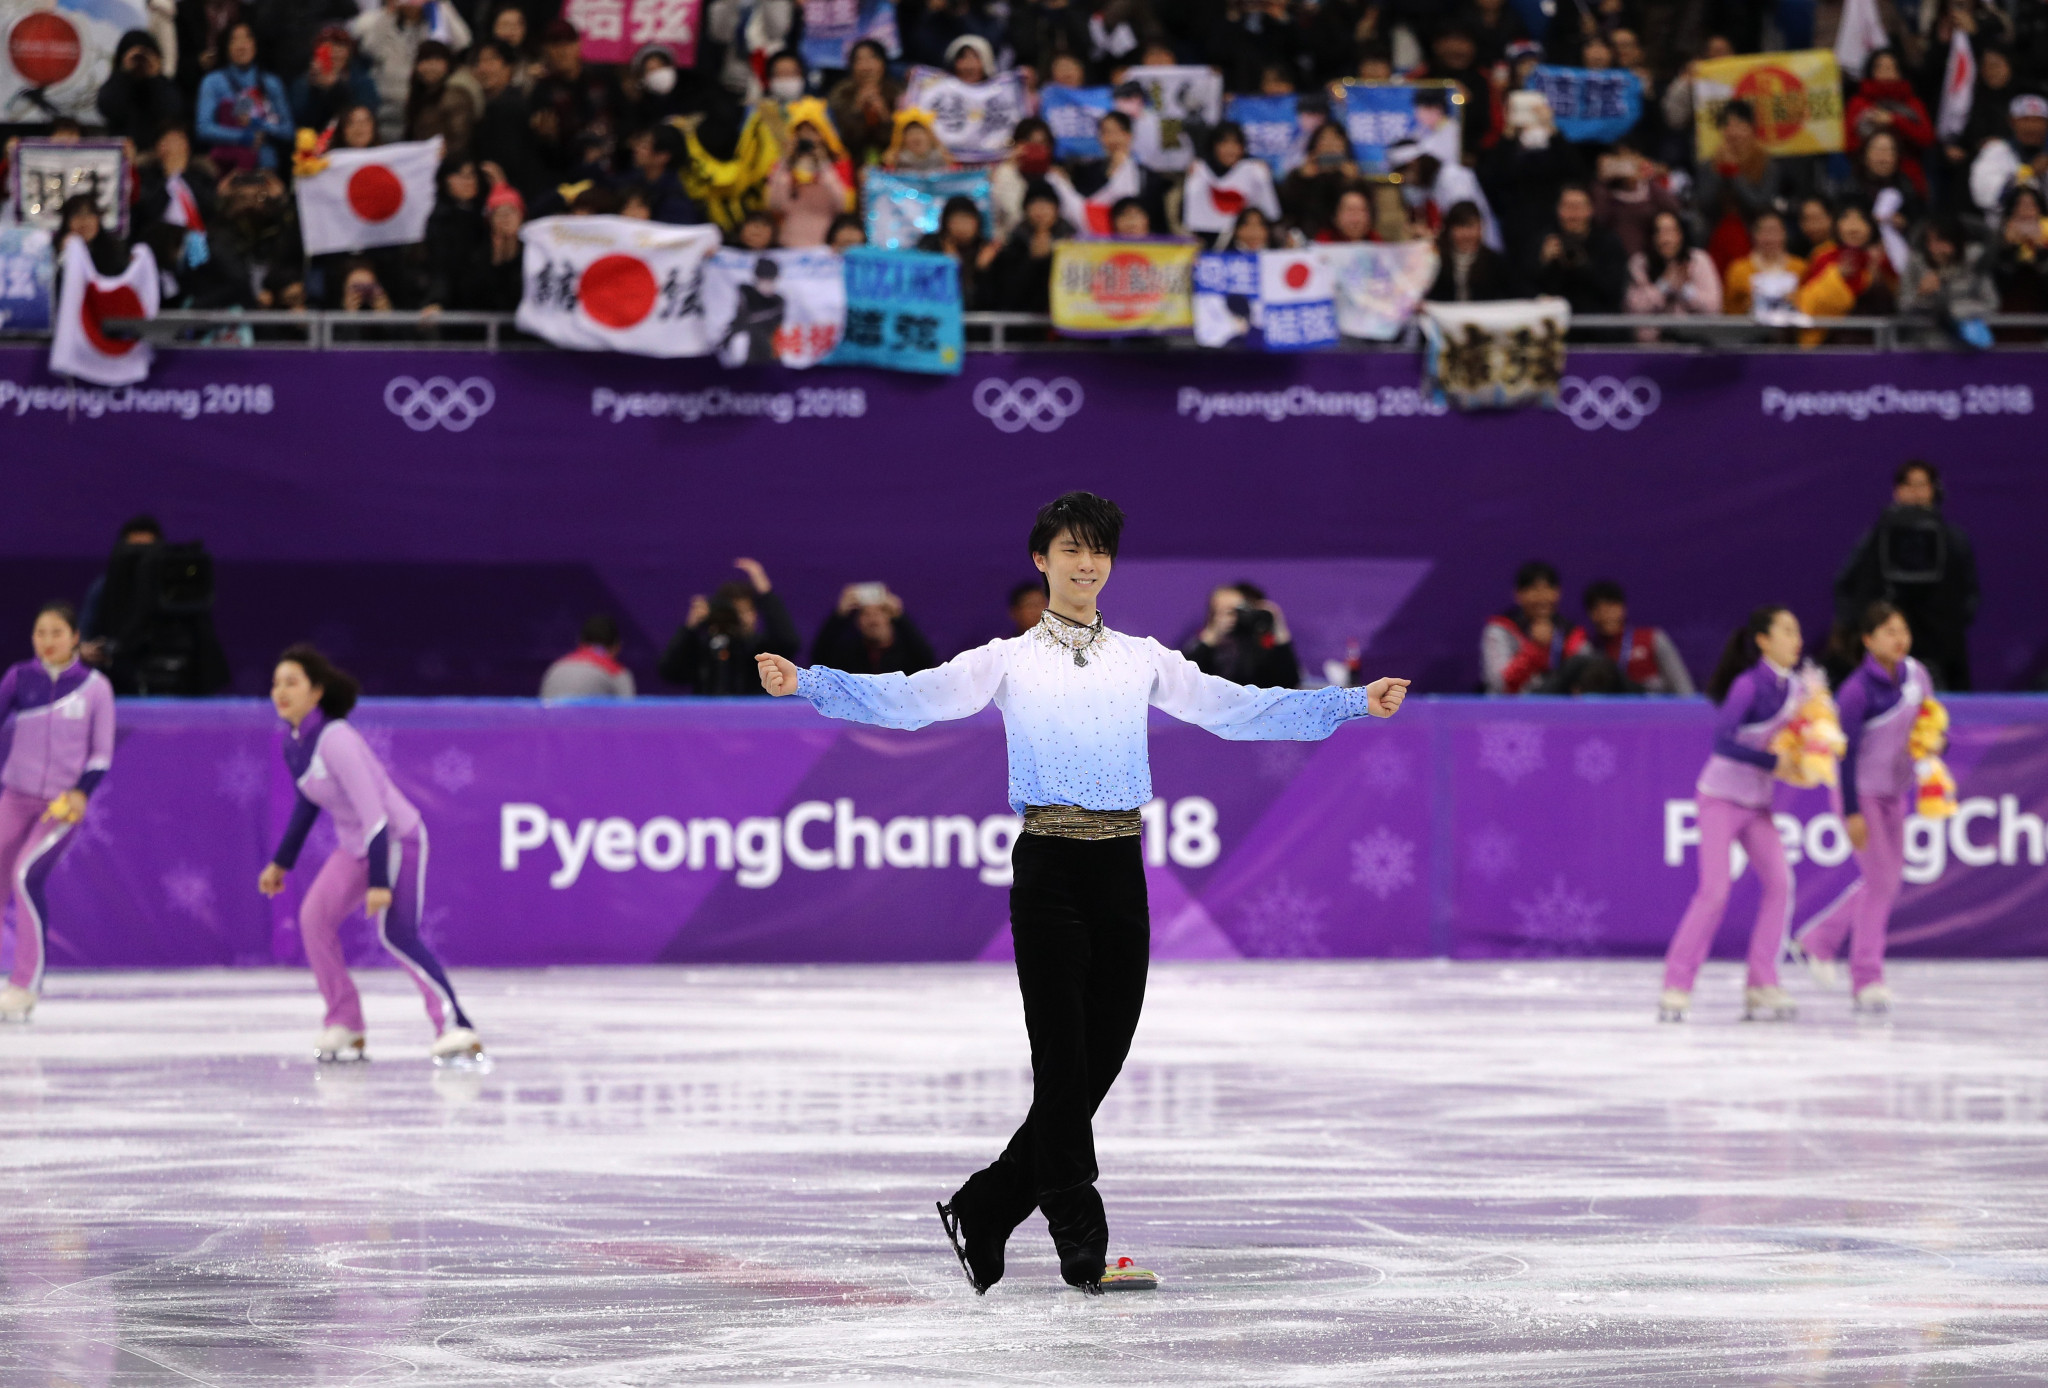 Japanese figure skater Yuzuru Hanyu topped the men's singles short programme standings ©Getty Images